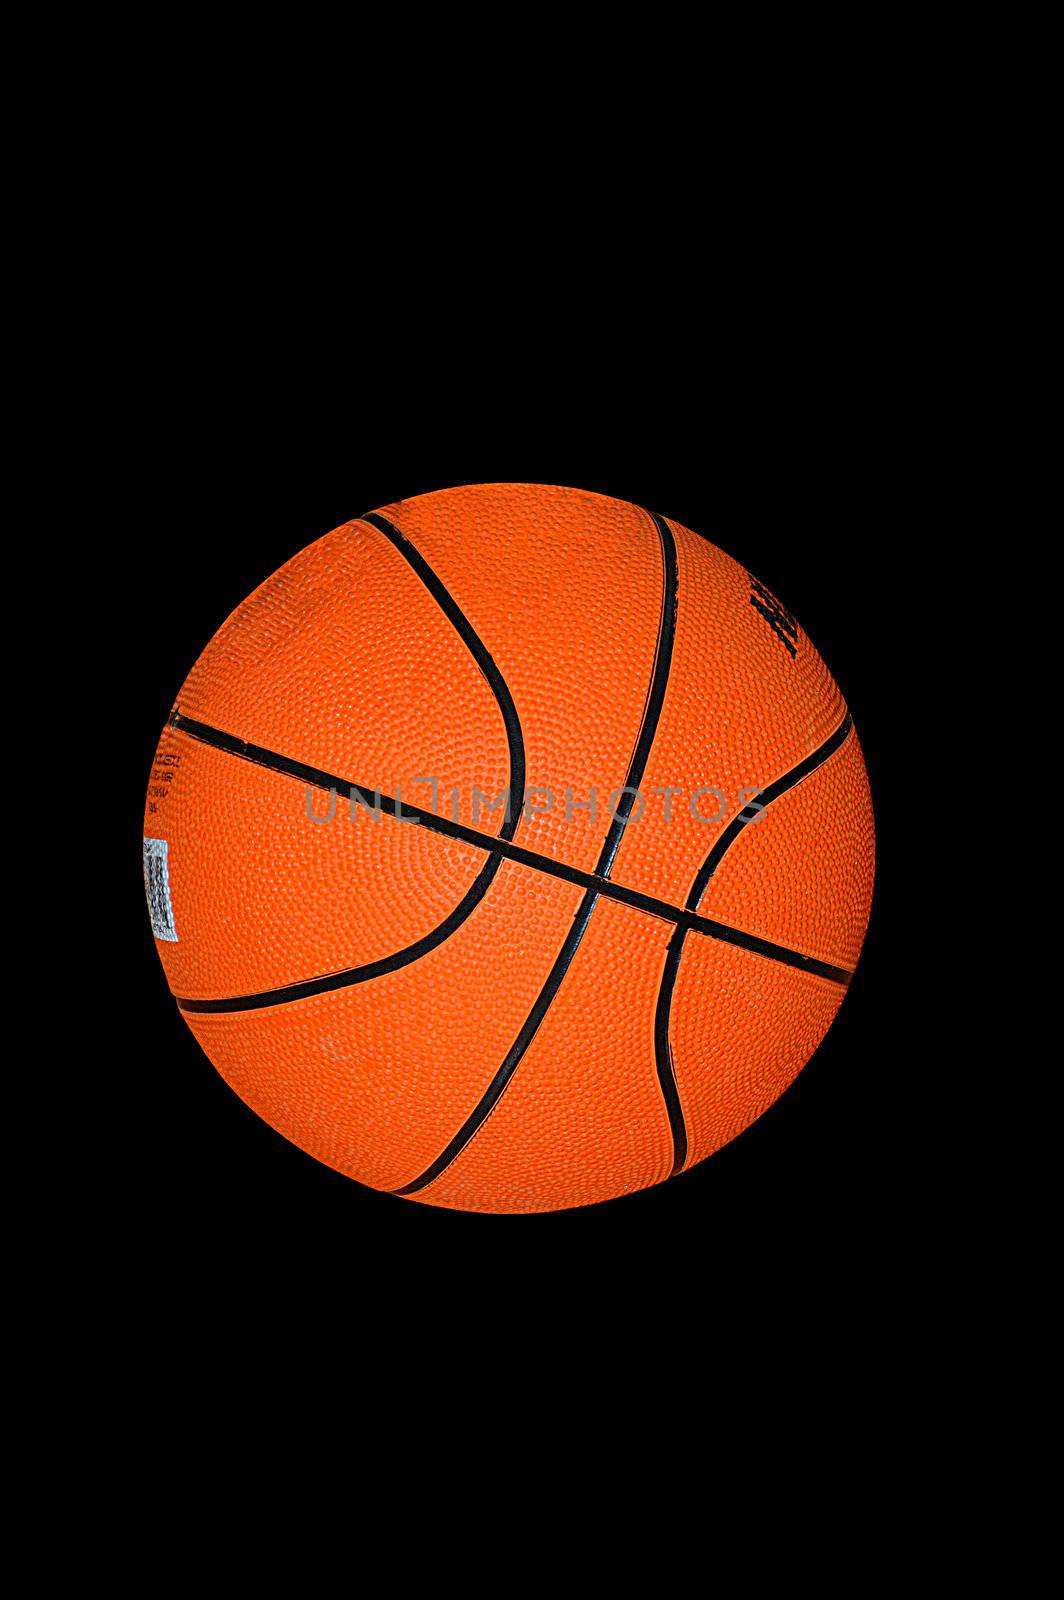 Basketball by pazham